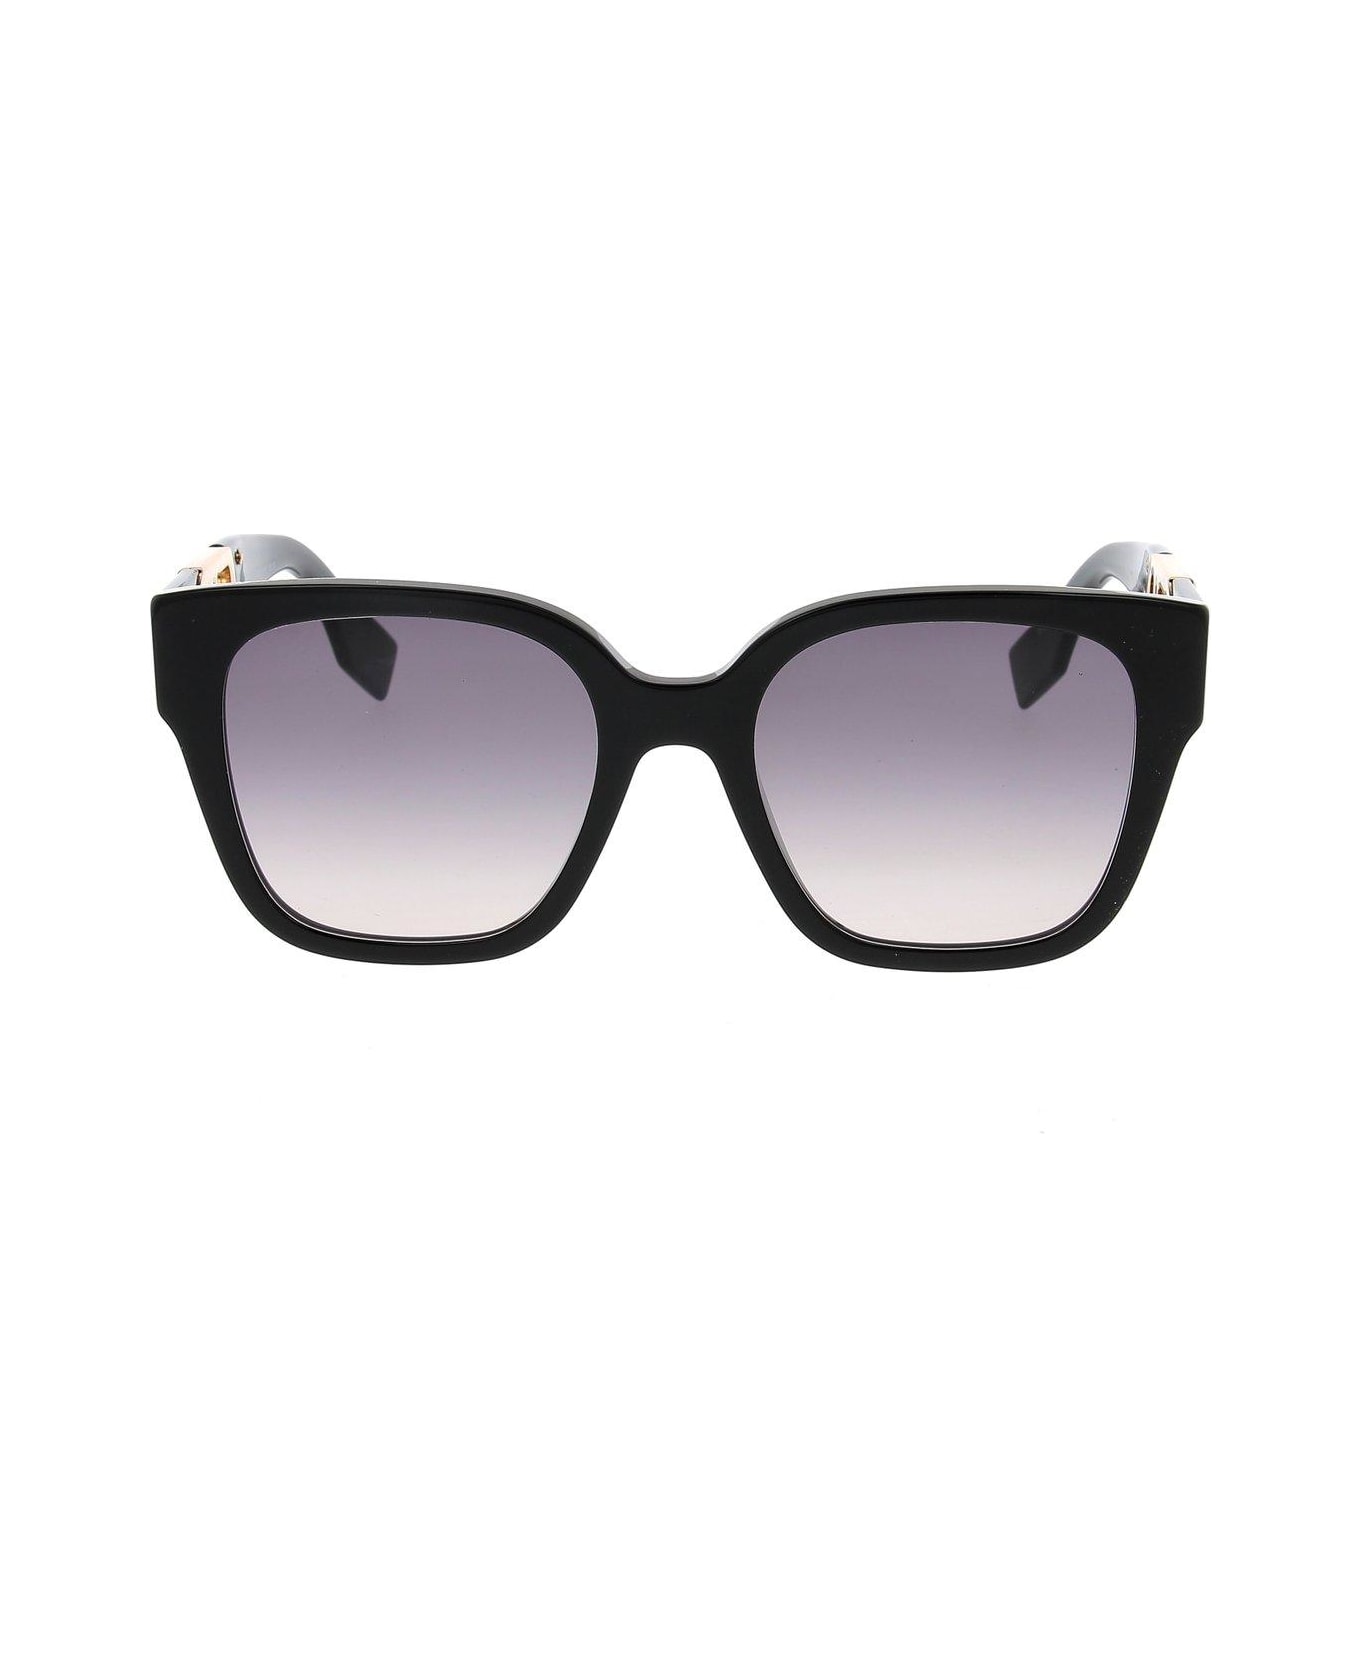 Fendi Eyewear Cat-eye Frame Sunglasses - Nero/Grigio